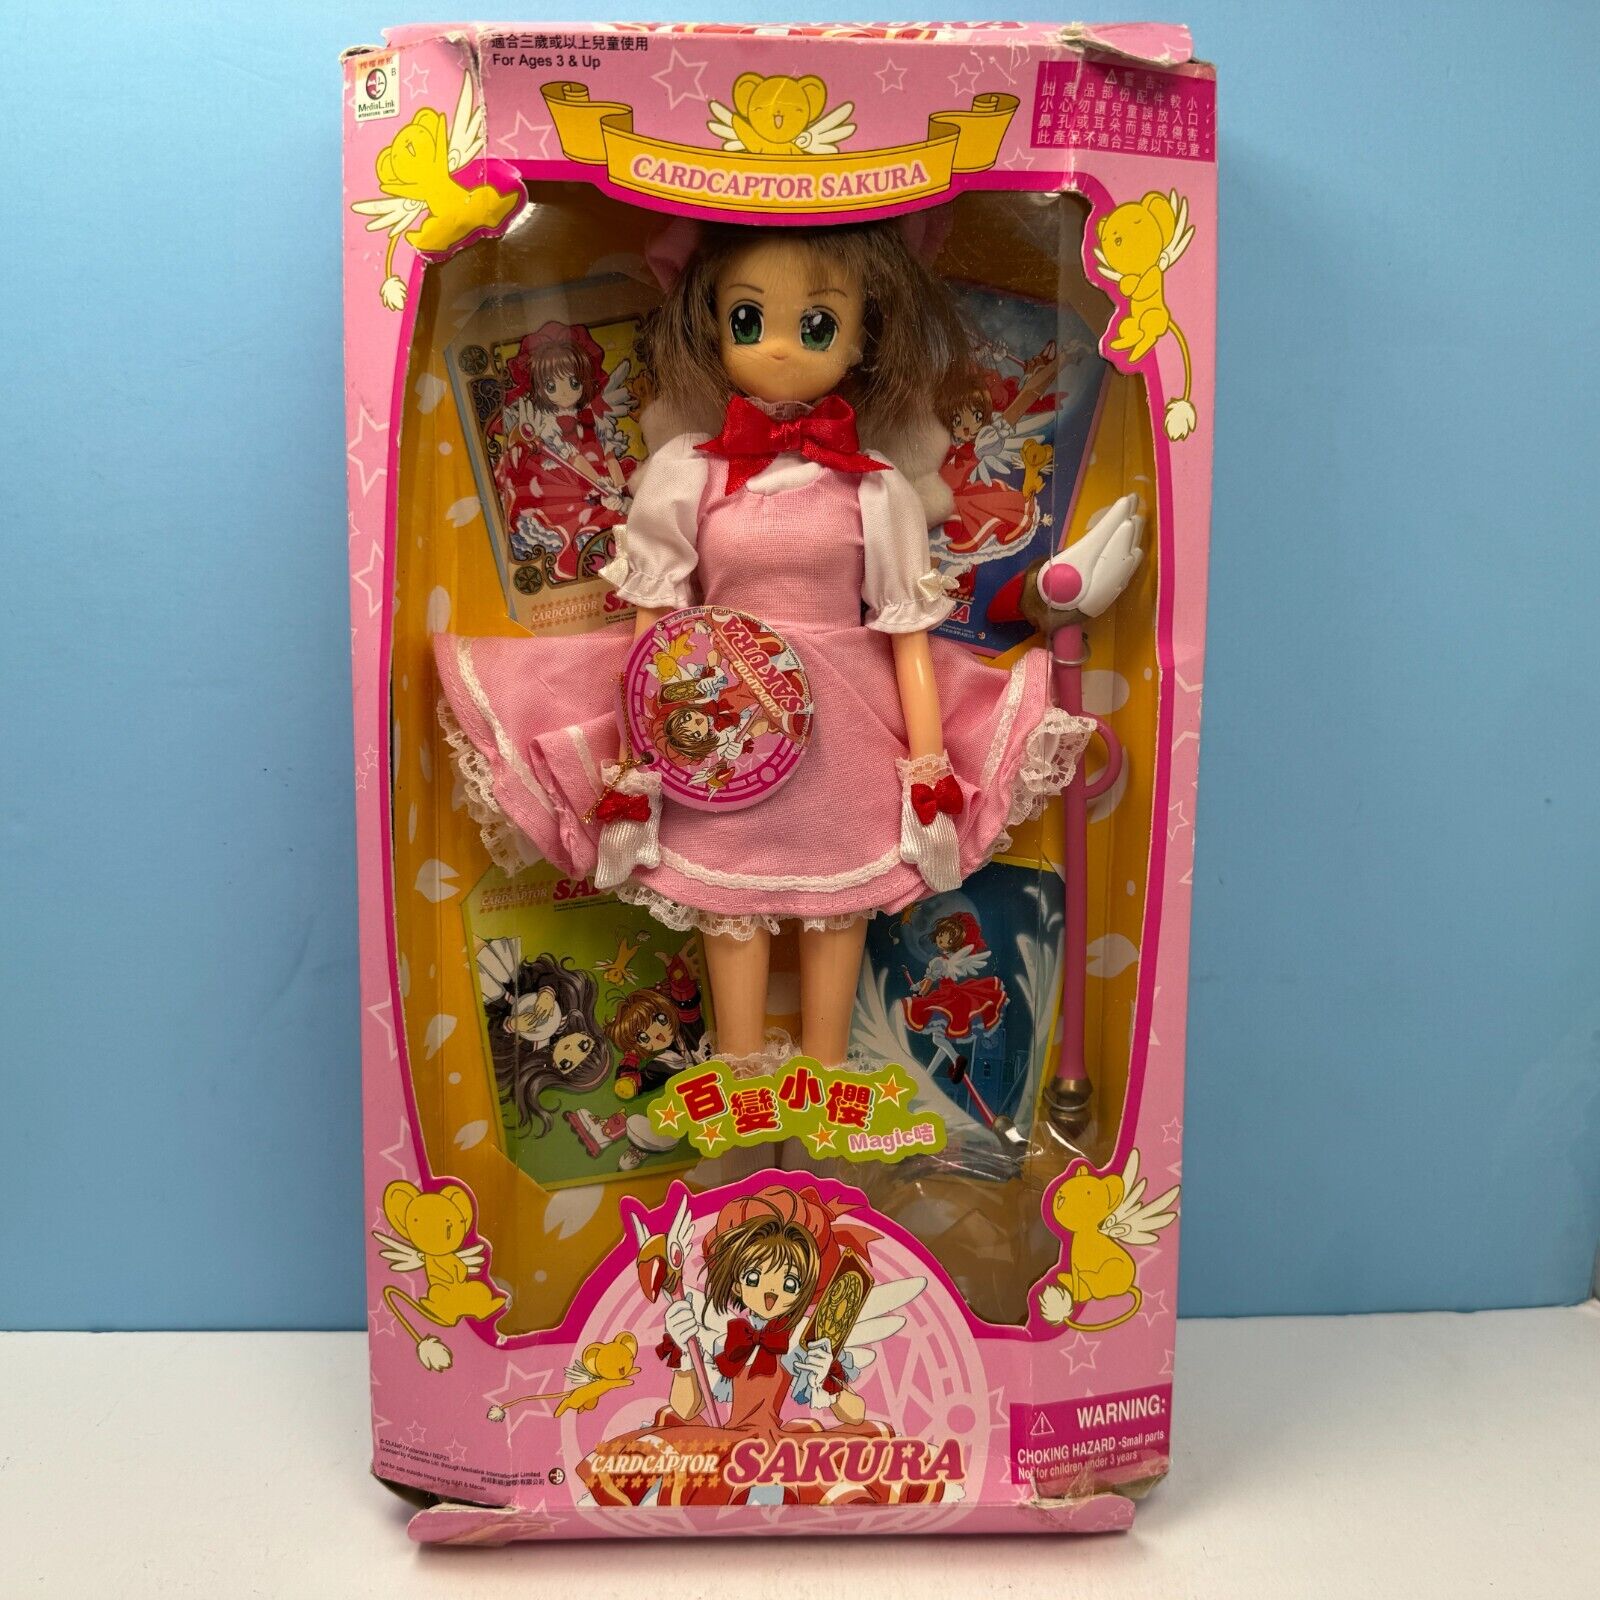 CARDCAPTOR SAKURA FIGURE Pink Dress Doll Figure 11